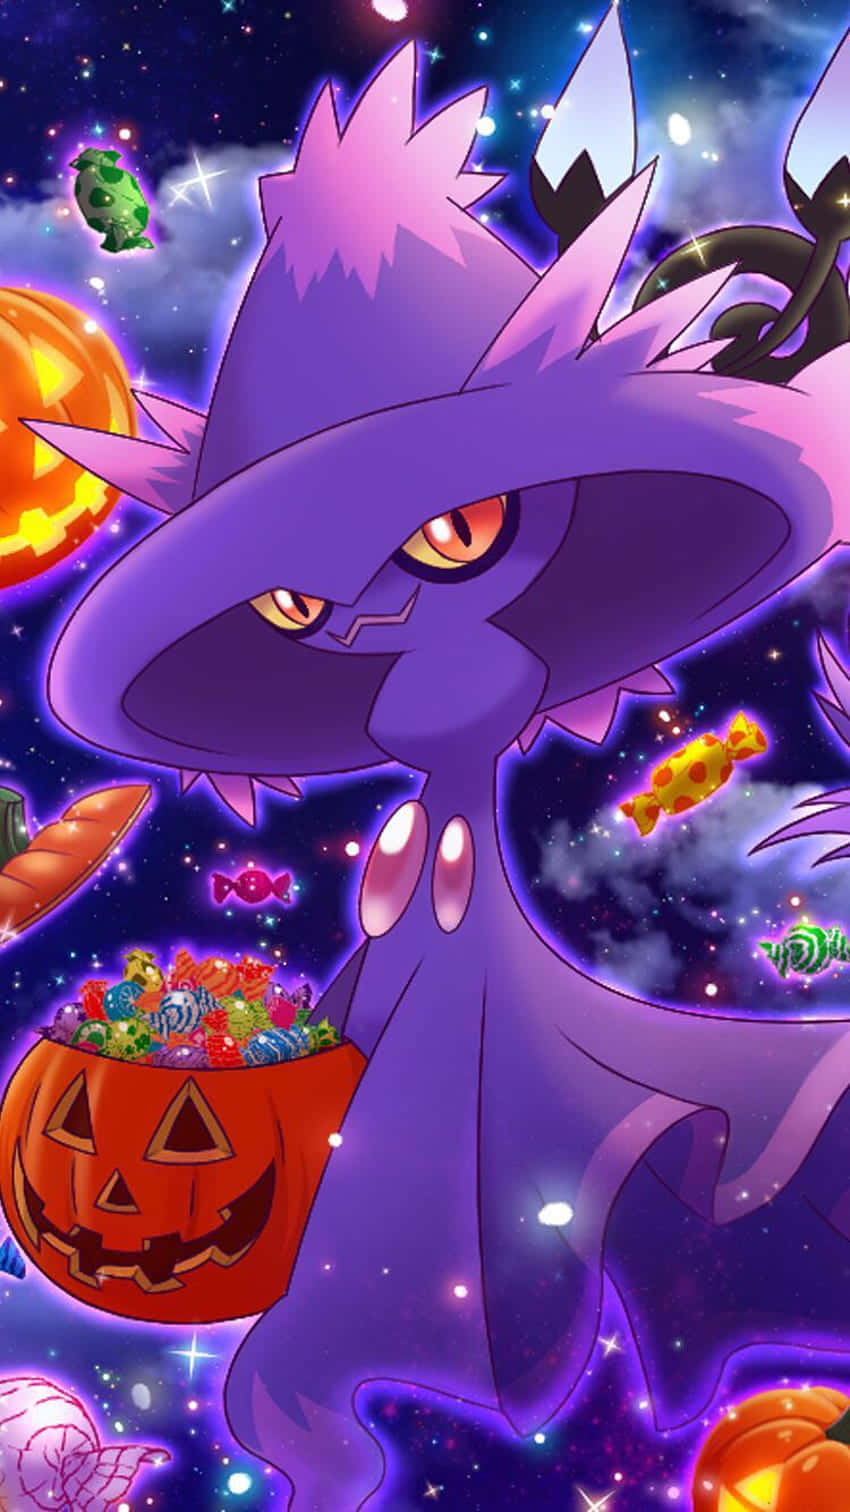 Pokémon Mismagius With Halloween Pumpkin Wallpaper